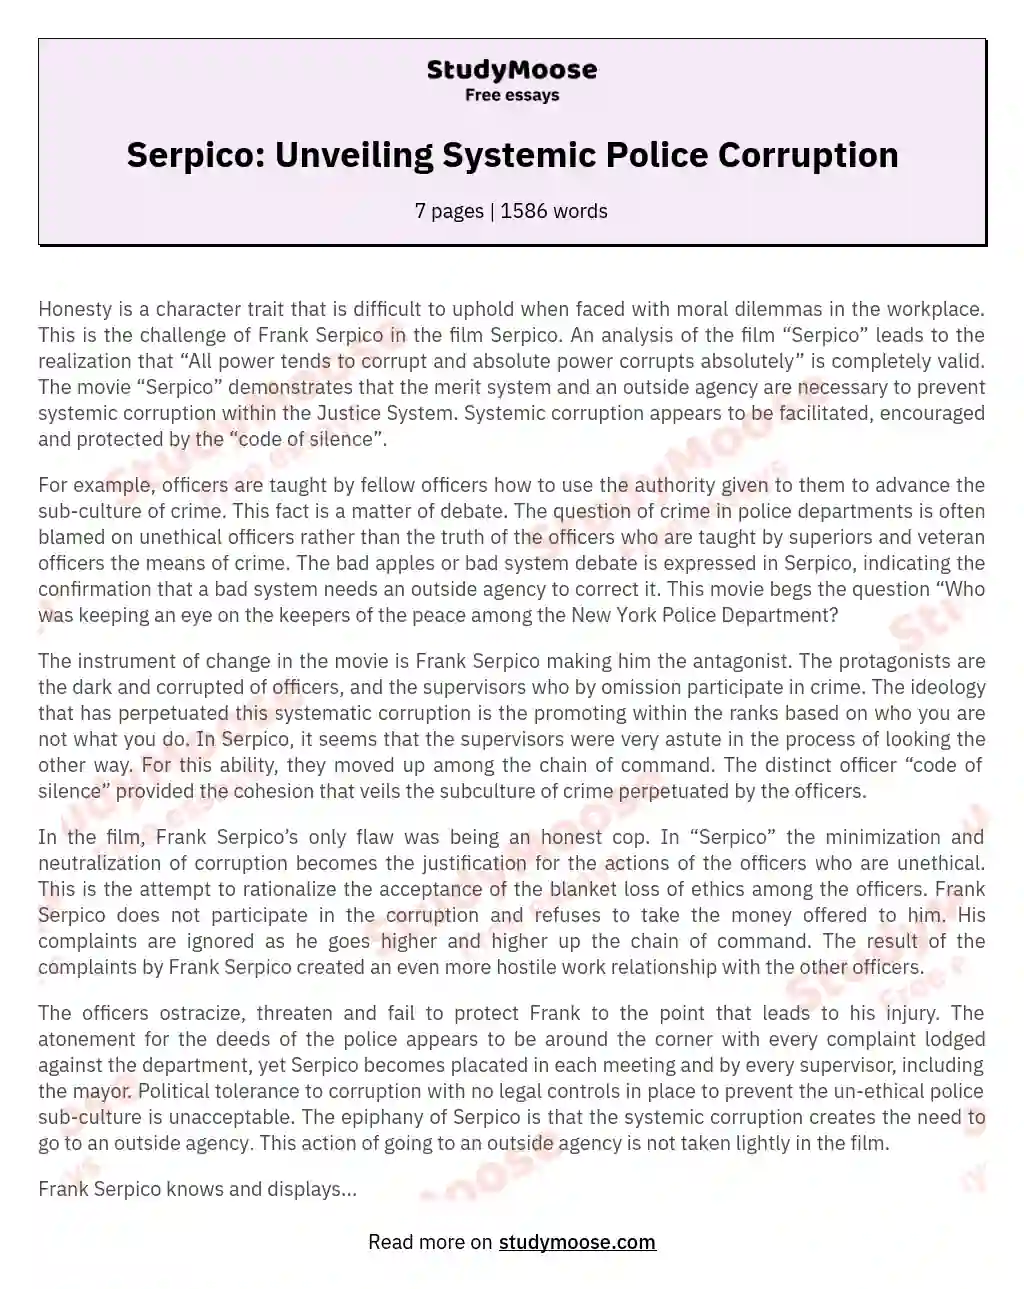 Serpico: Unveiling Systemic Police Corruption essay